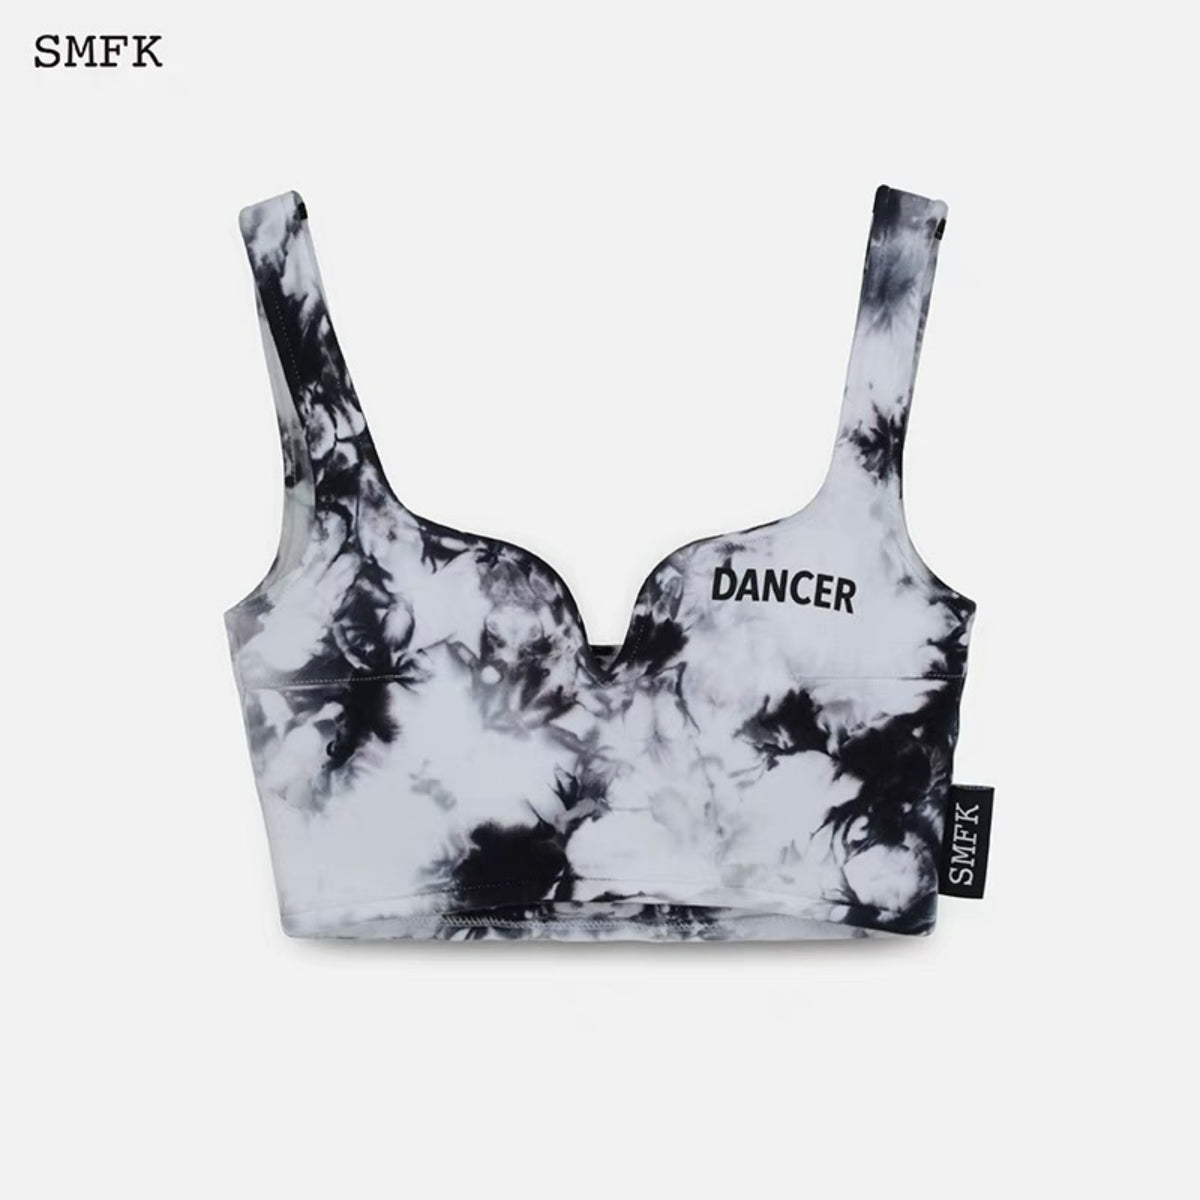 SMFK Dancer Tie-dye Black Darkness Dane Group Ballet Back